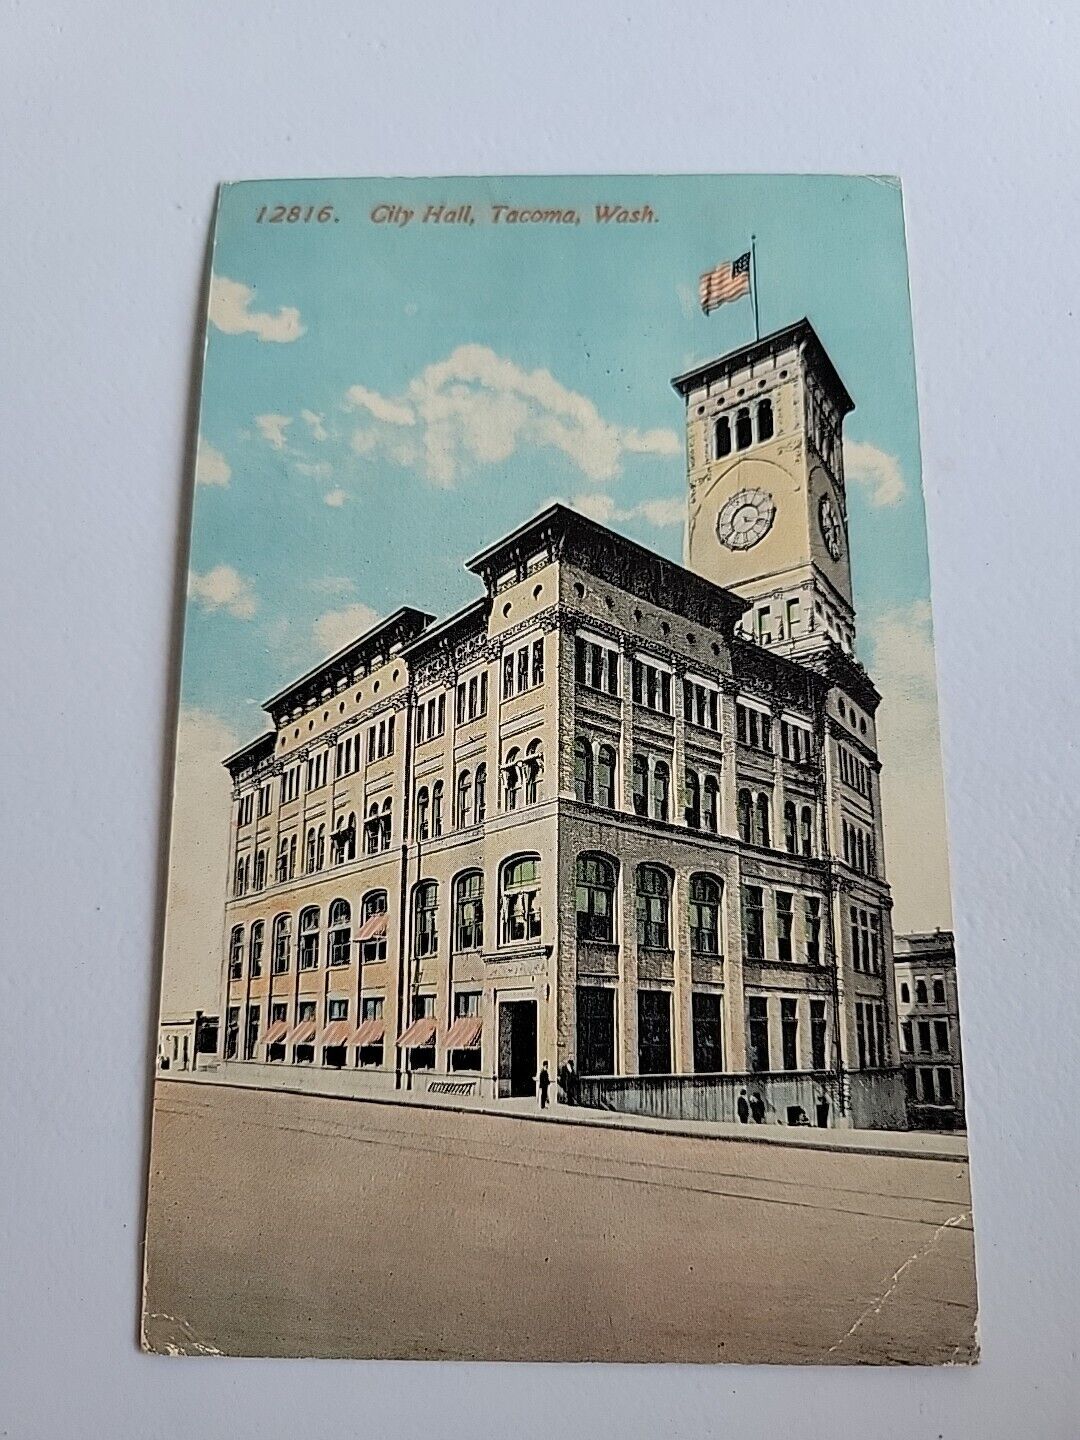 vintage postcard washington state 12816 city hall tacoma posted stamped